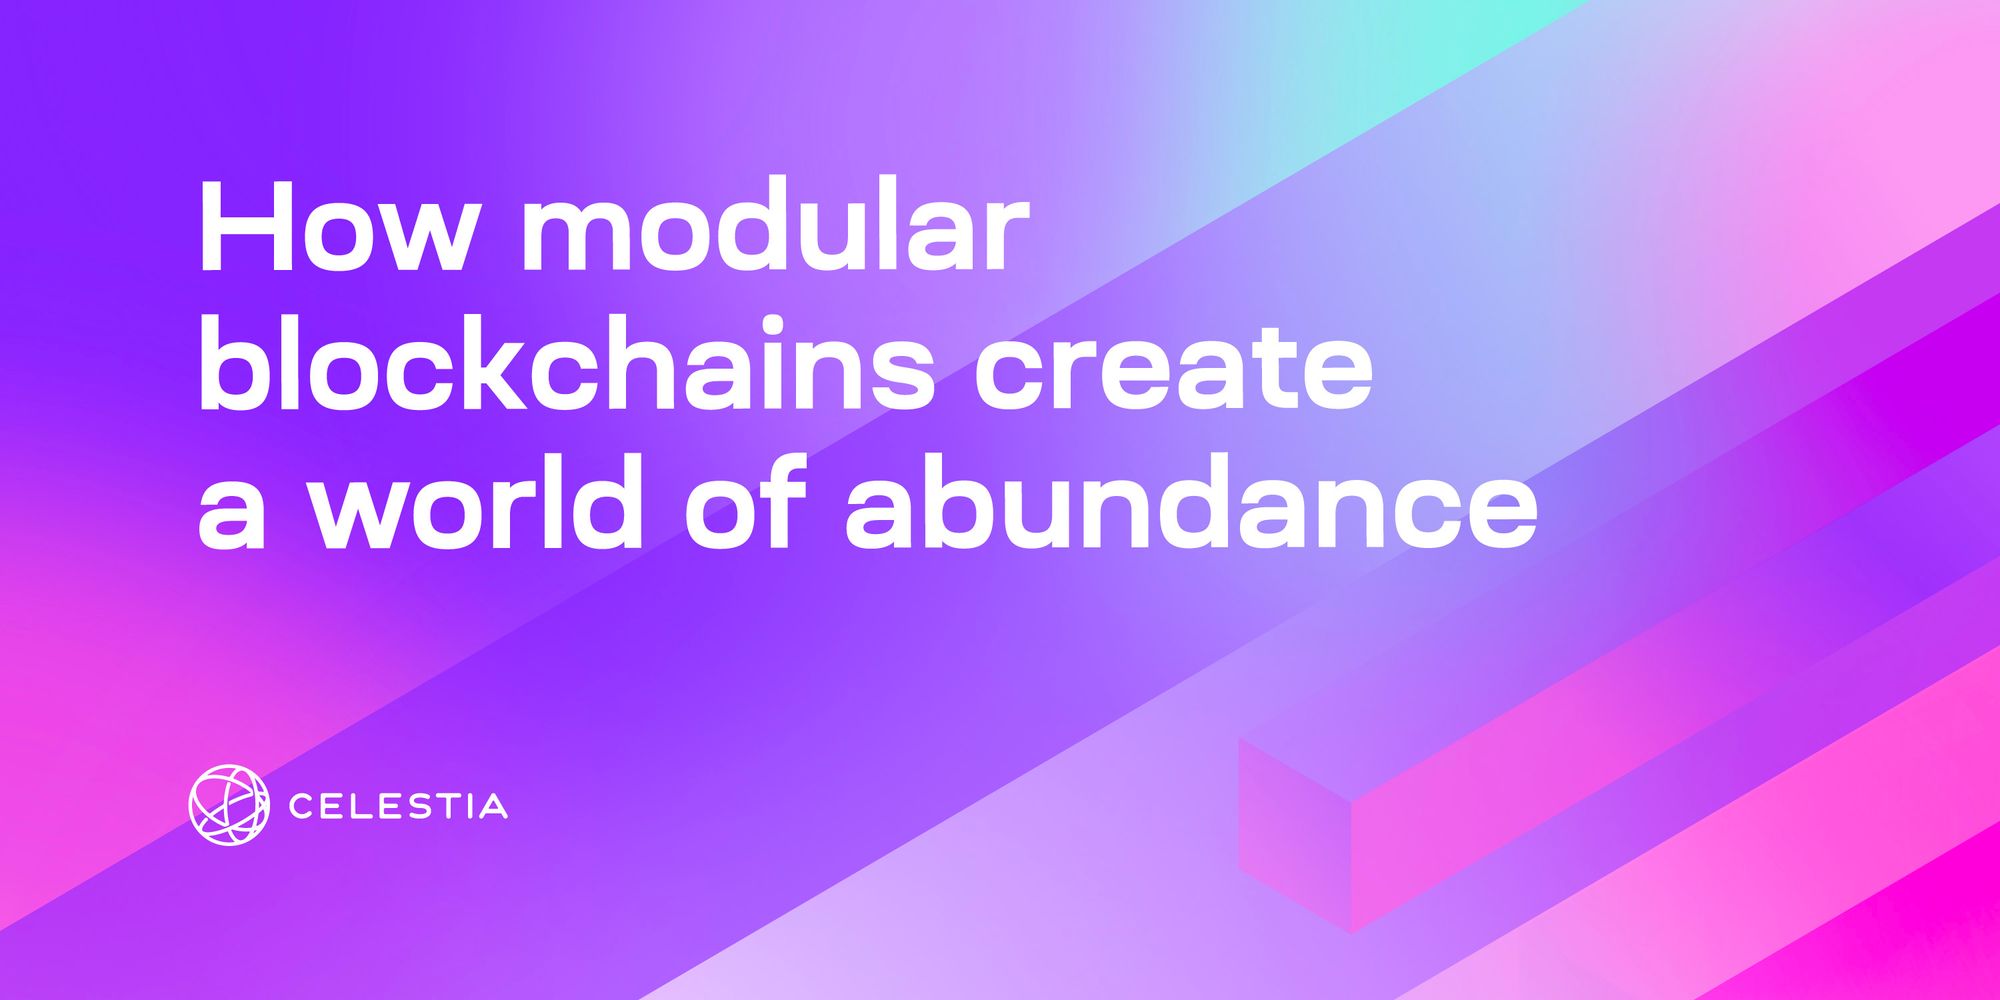 How modular blockchains create a world of abundance